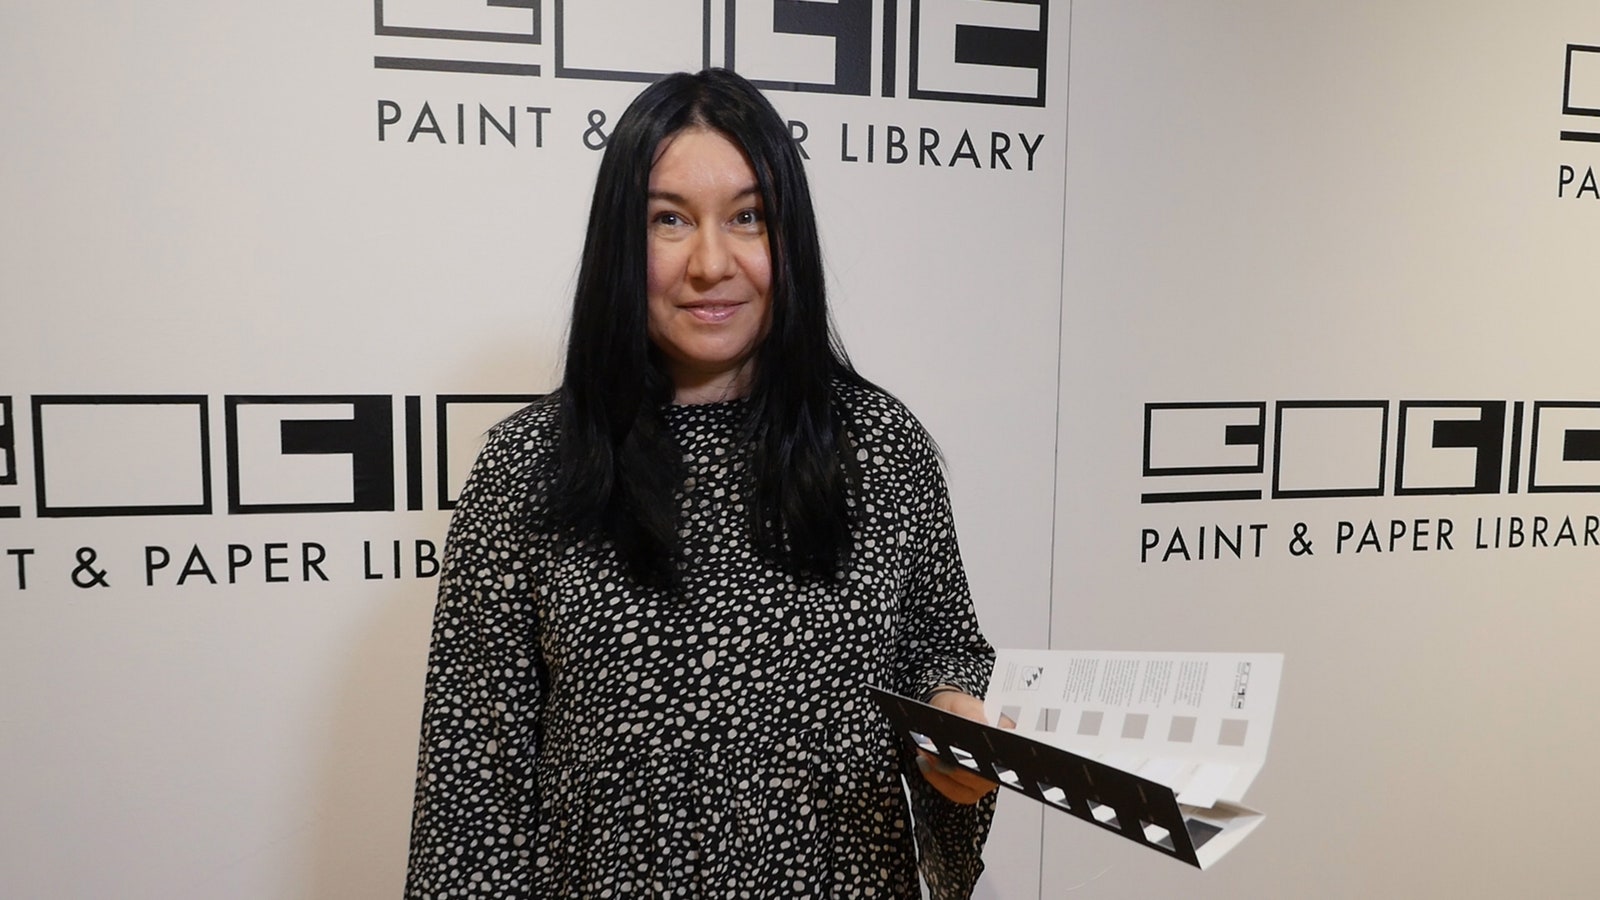 Презентация новой палитры Paint  Paper Library в Музее ДПИ